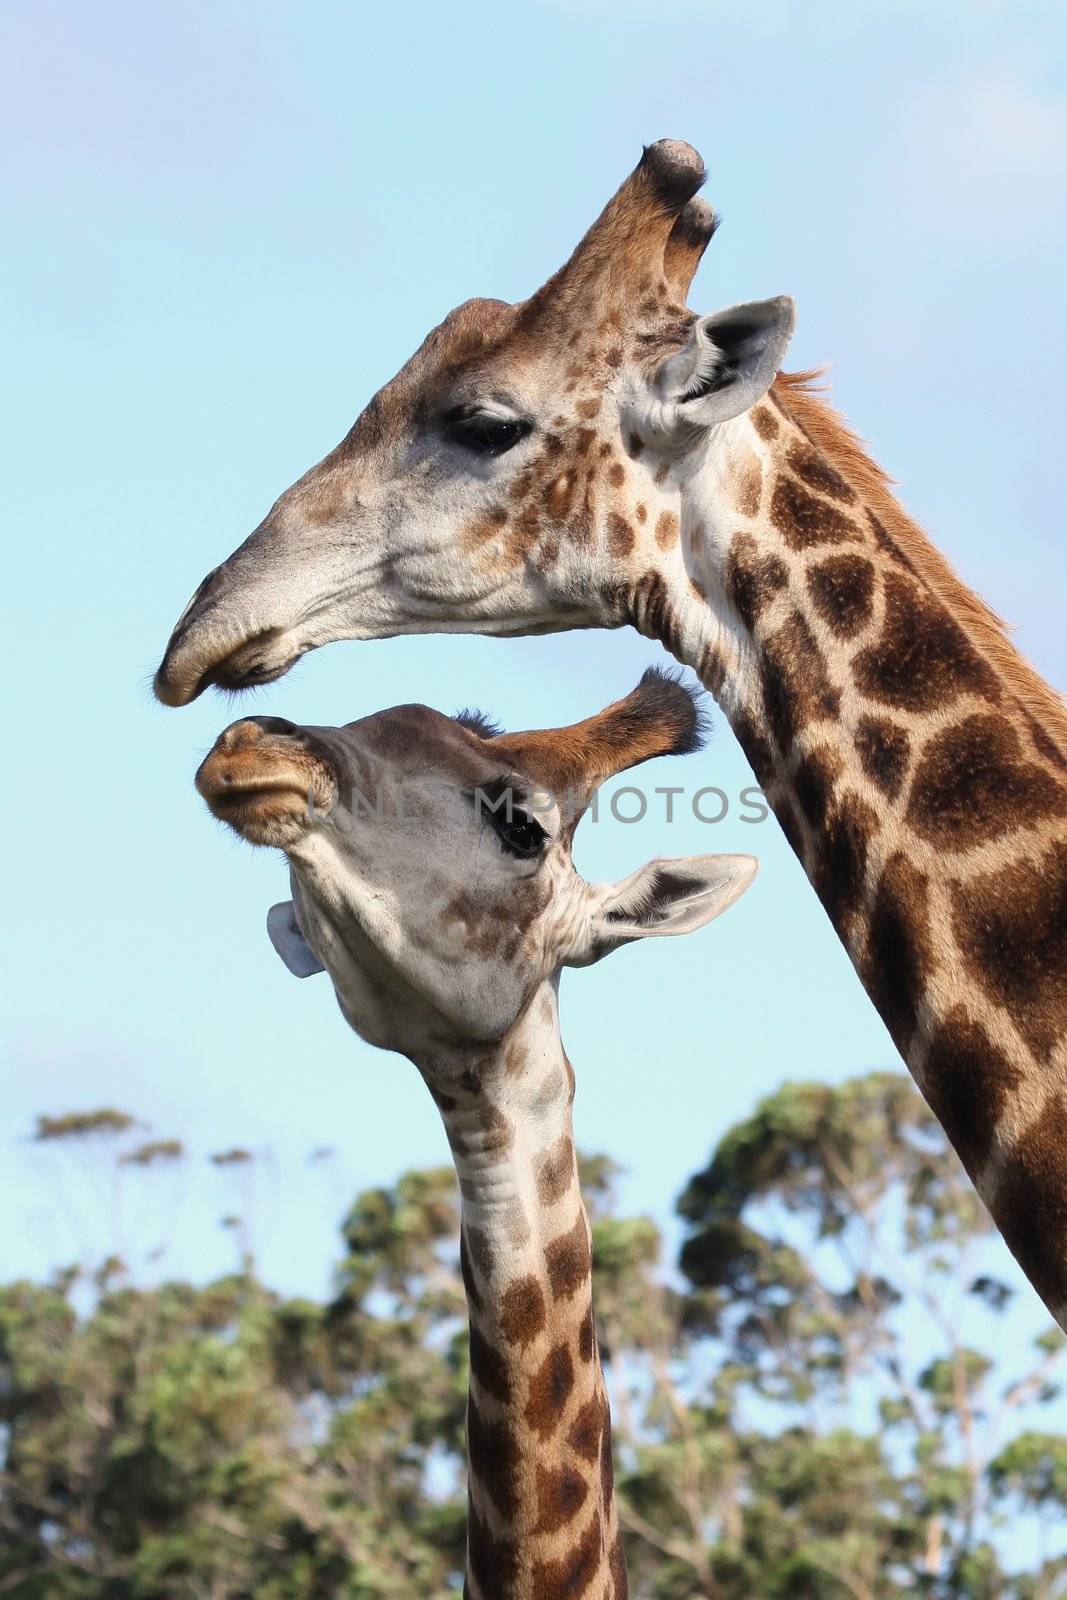 Kissing Giraffes by fouroaks